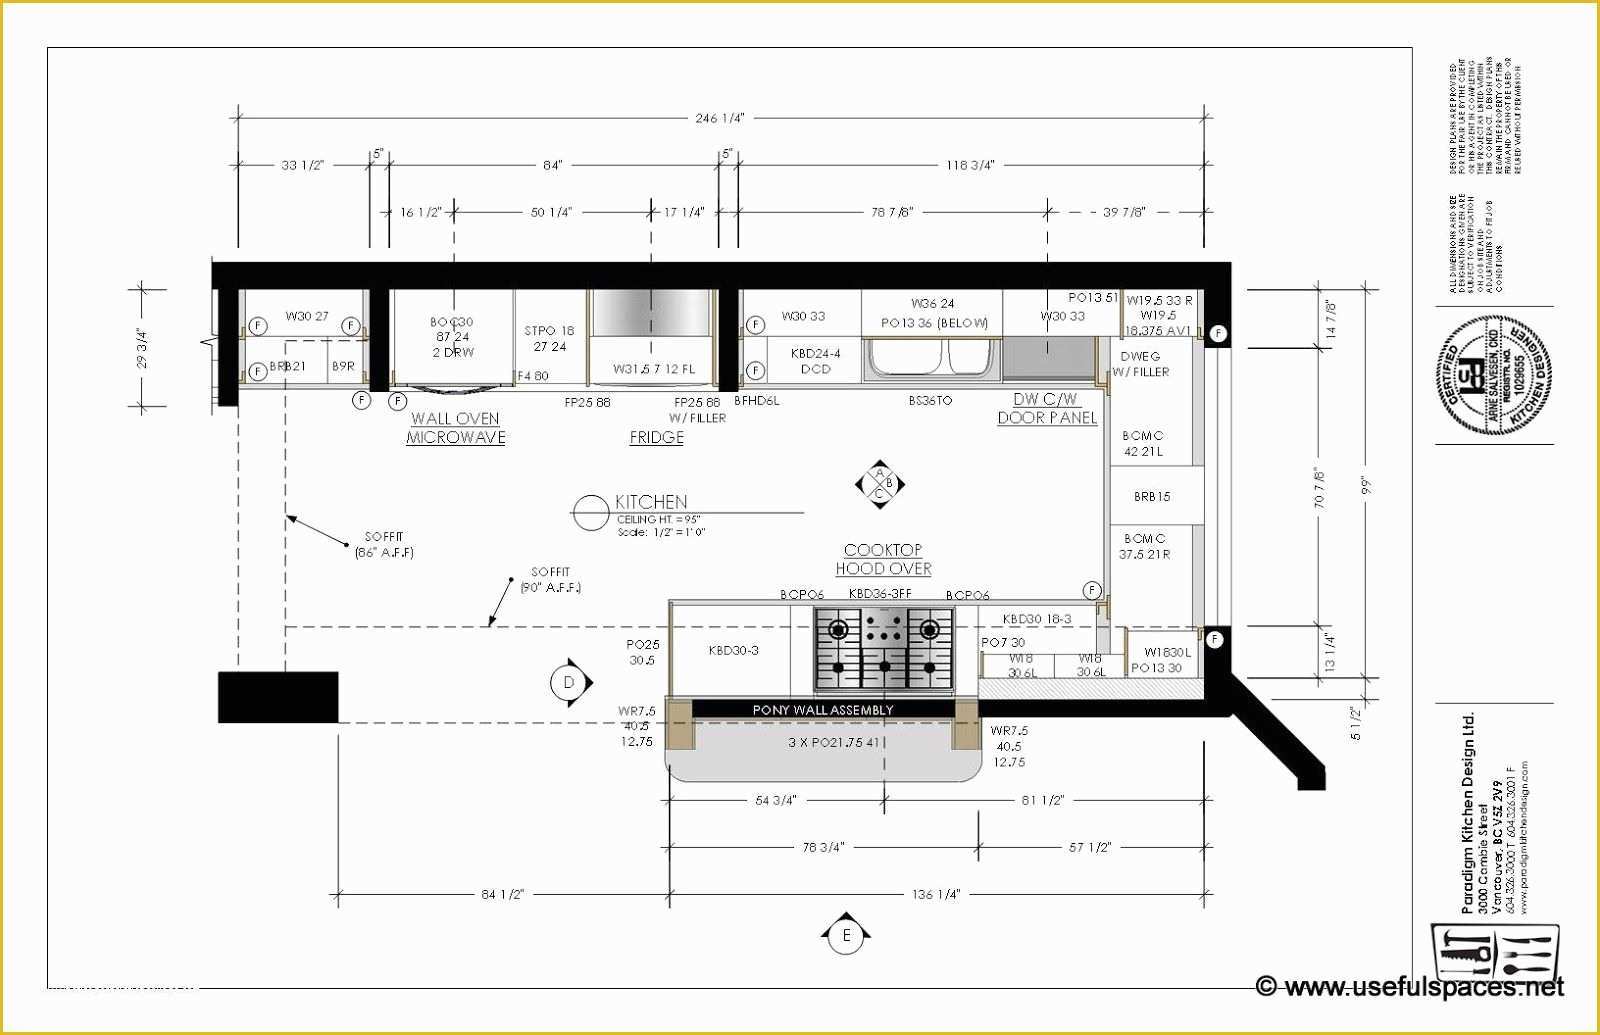 Restaurant Floor Plan Template Free Of Kitchen Layout Templates Restaurant Floor Plan Samples